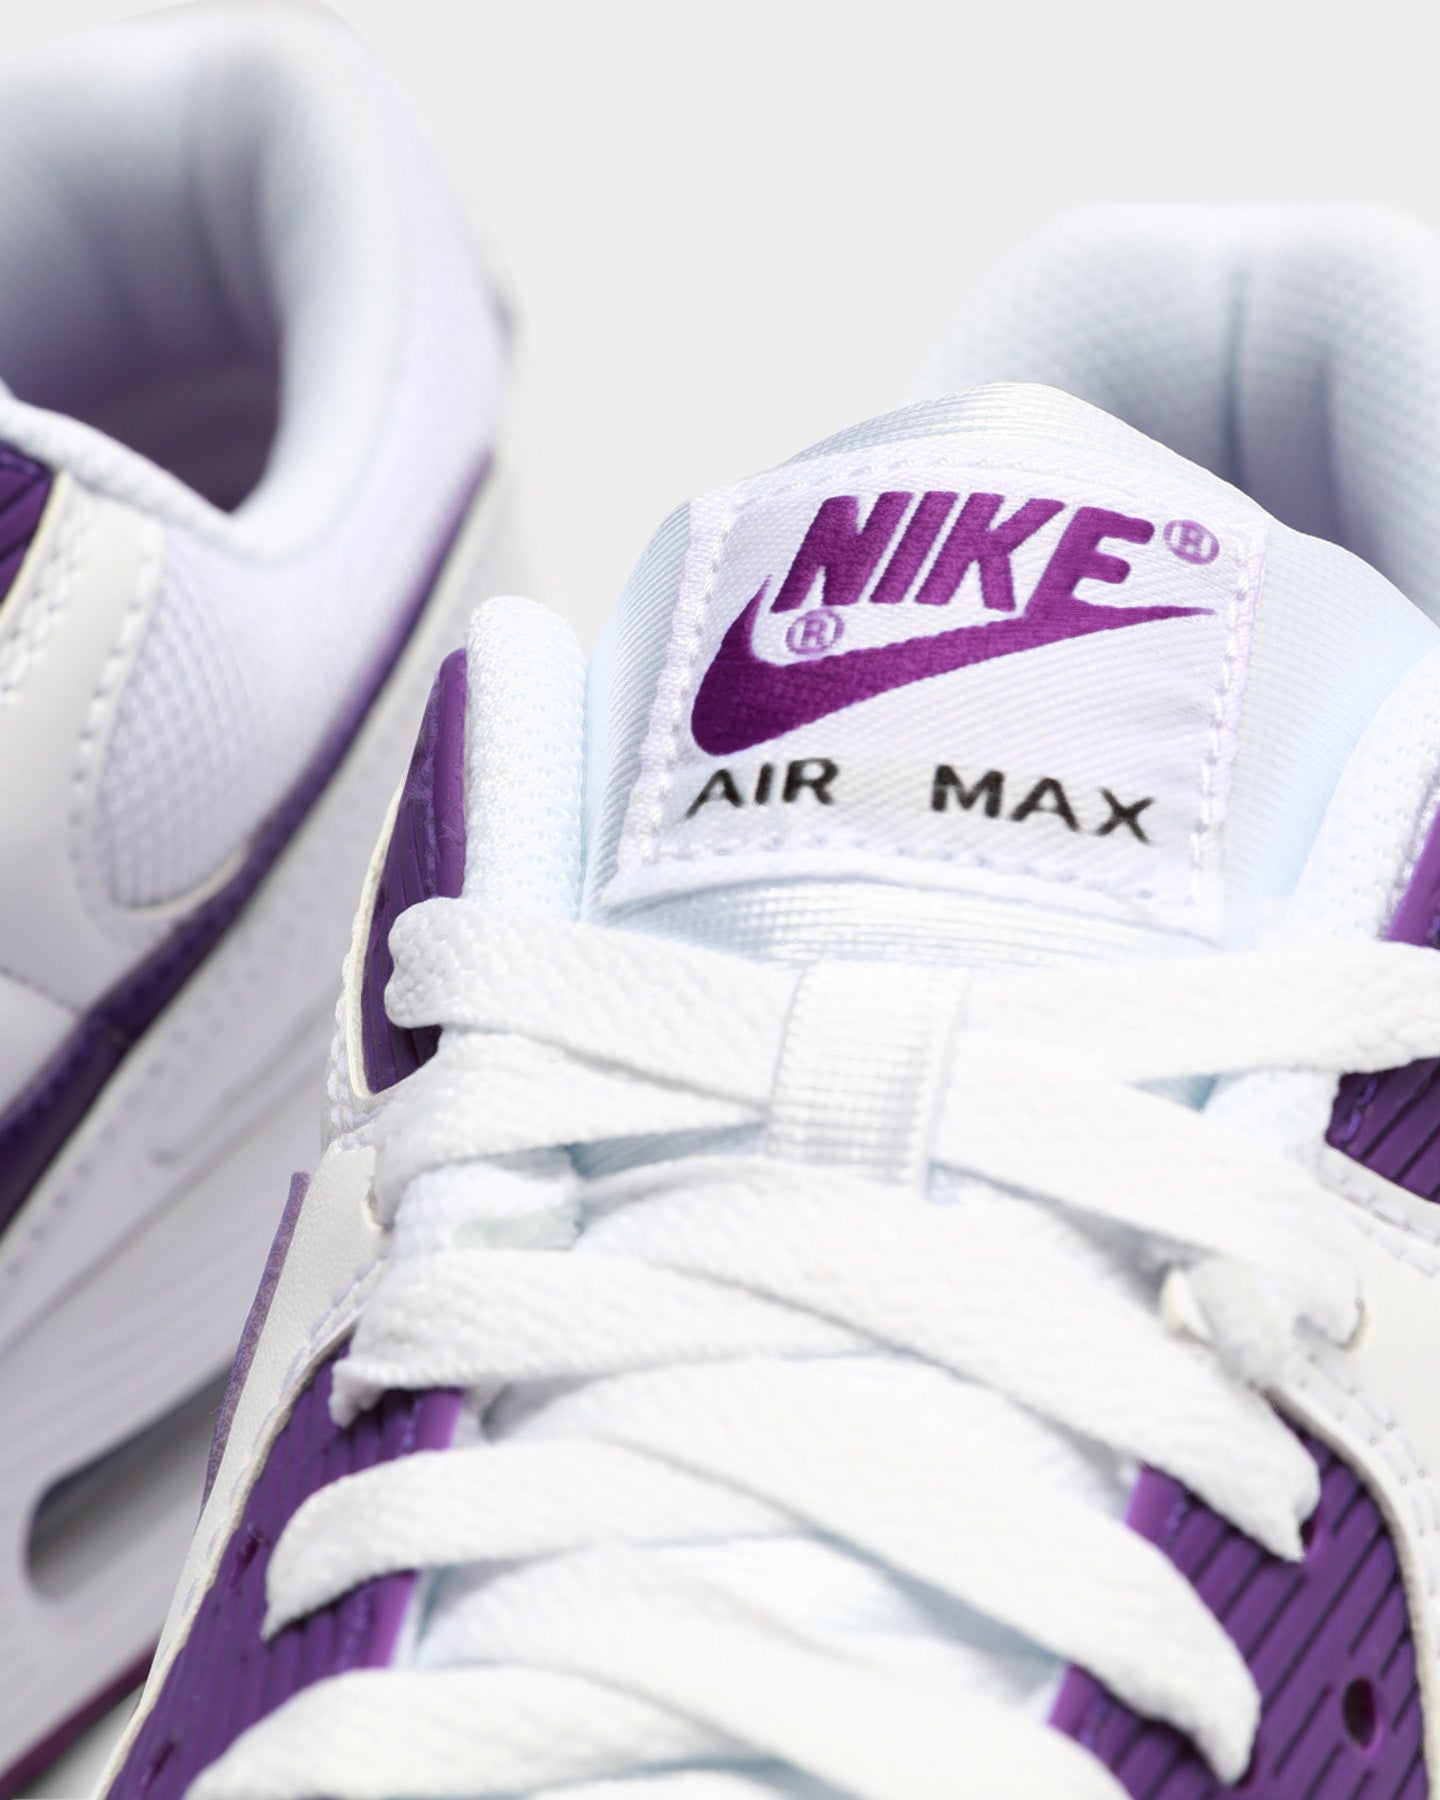 nike air max purple black and white